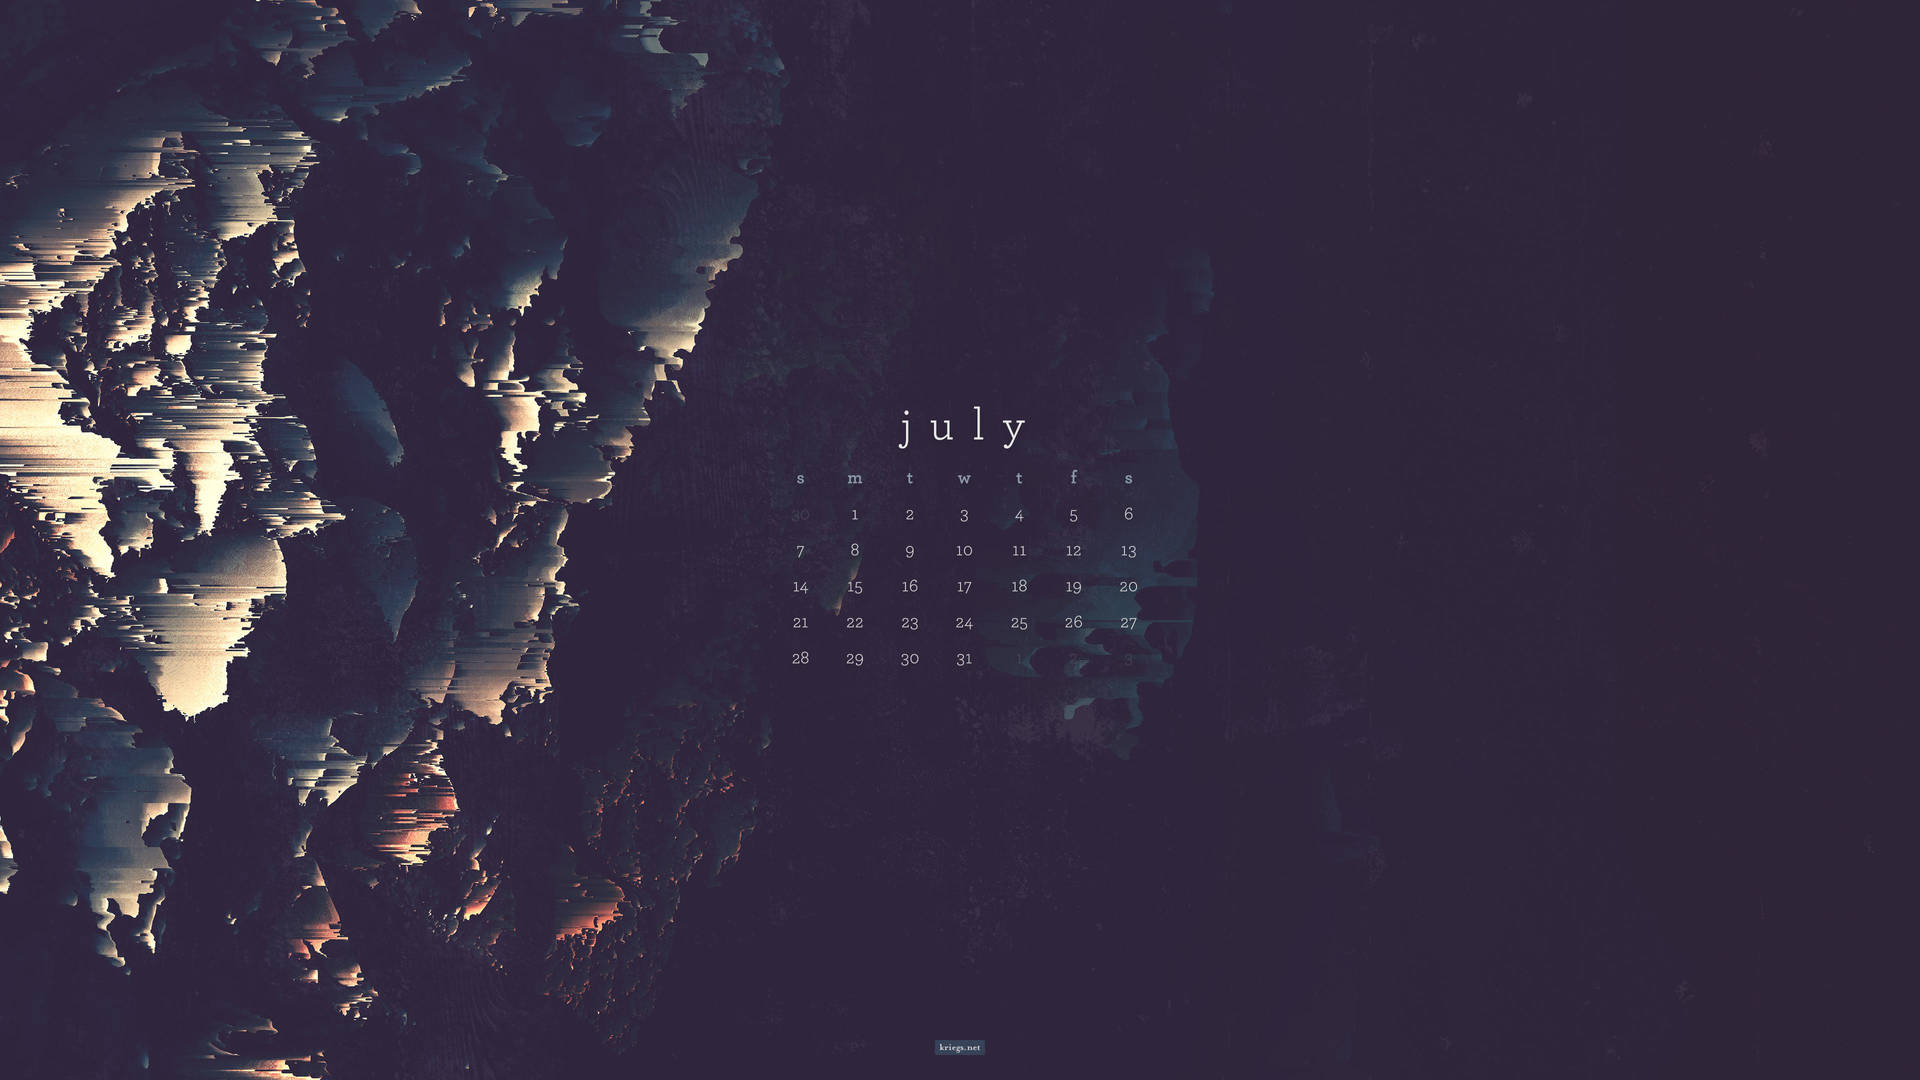 Hold dig organiseret med juli 2019 kalender wallpaper! Wallpaper